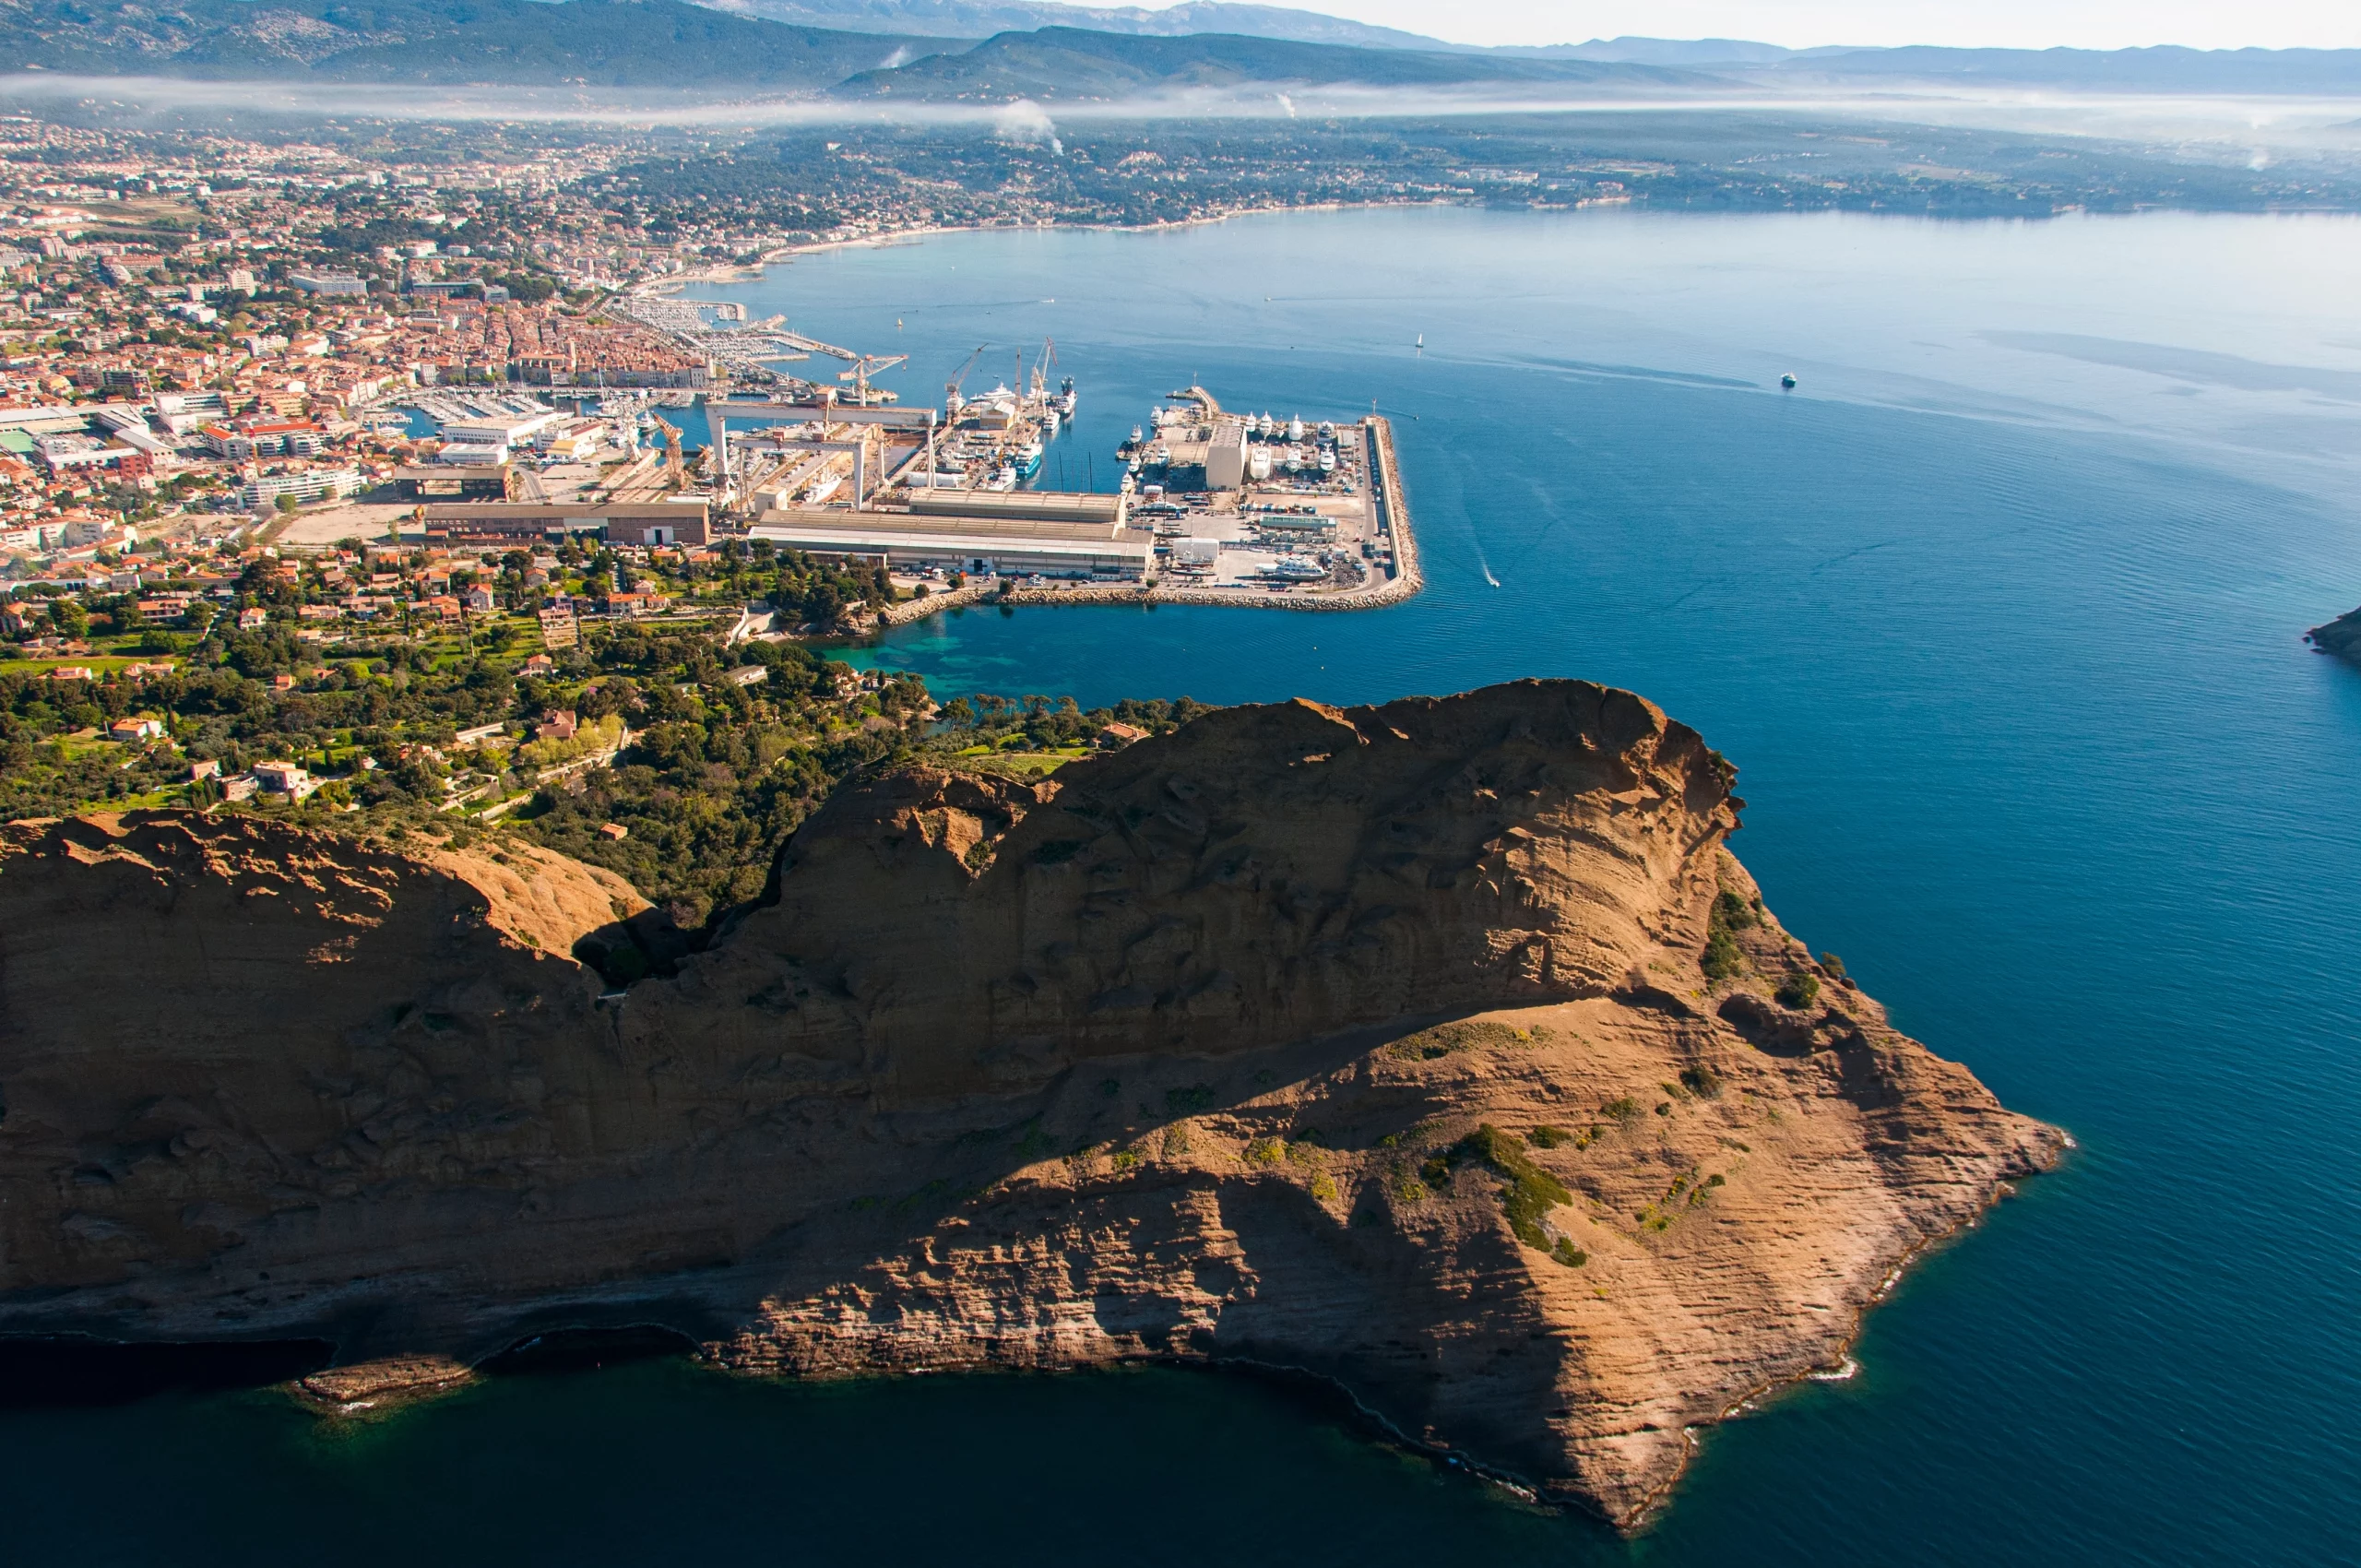 La Ciotat shipyards from above